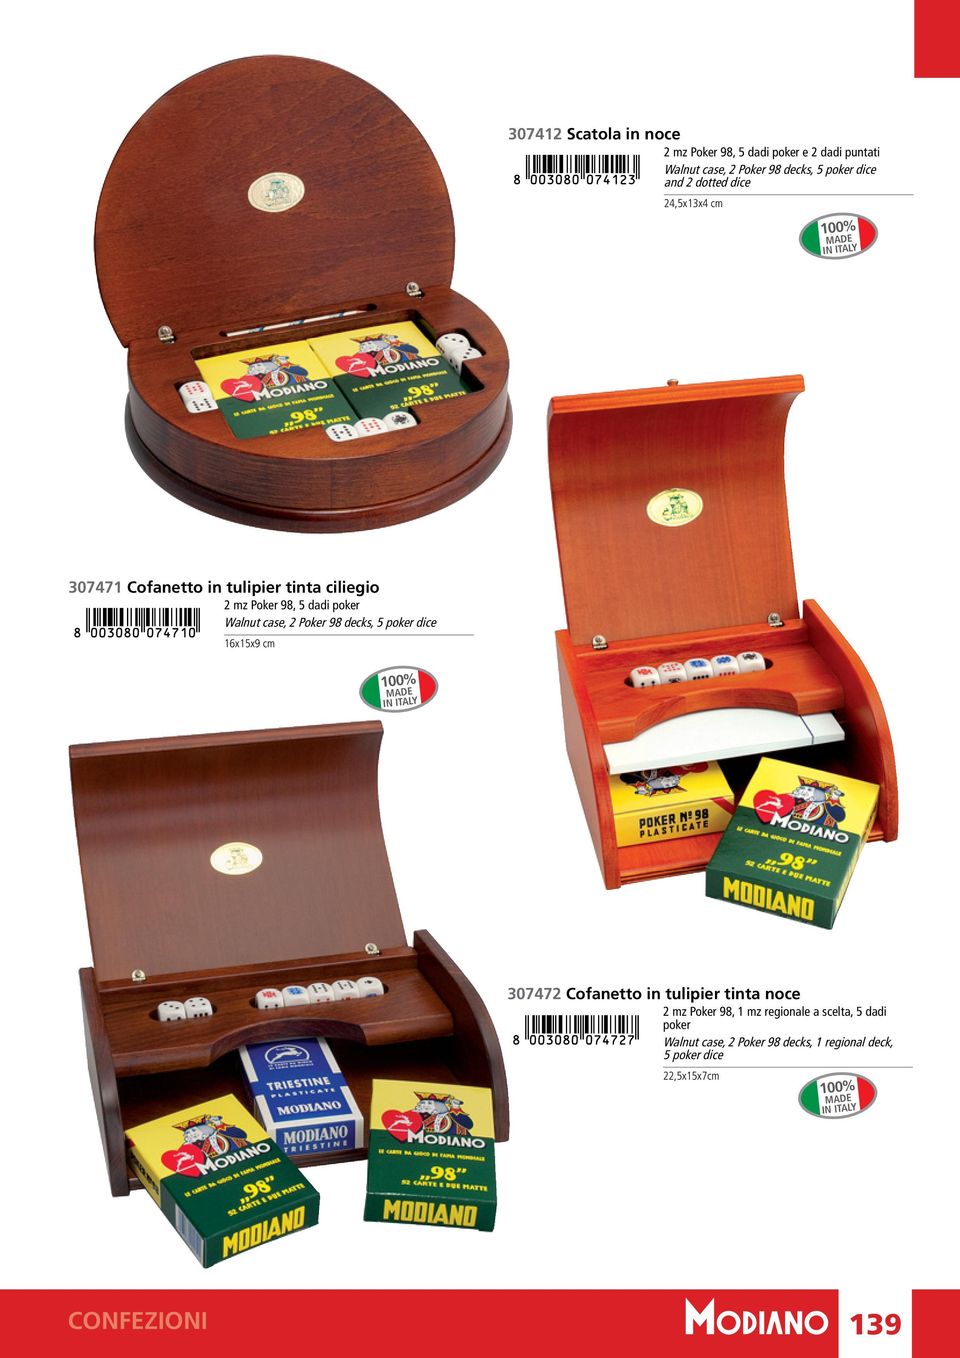 decks, 5 poker dice 16x15x9 cm 100% MADE IN ITALY foto da sostituire 307472 Cofanetto in tulipier tinta noce 2 mz Poker 98, 1 mz